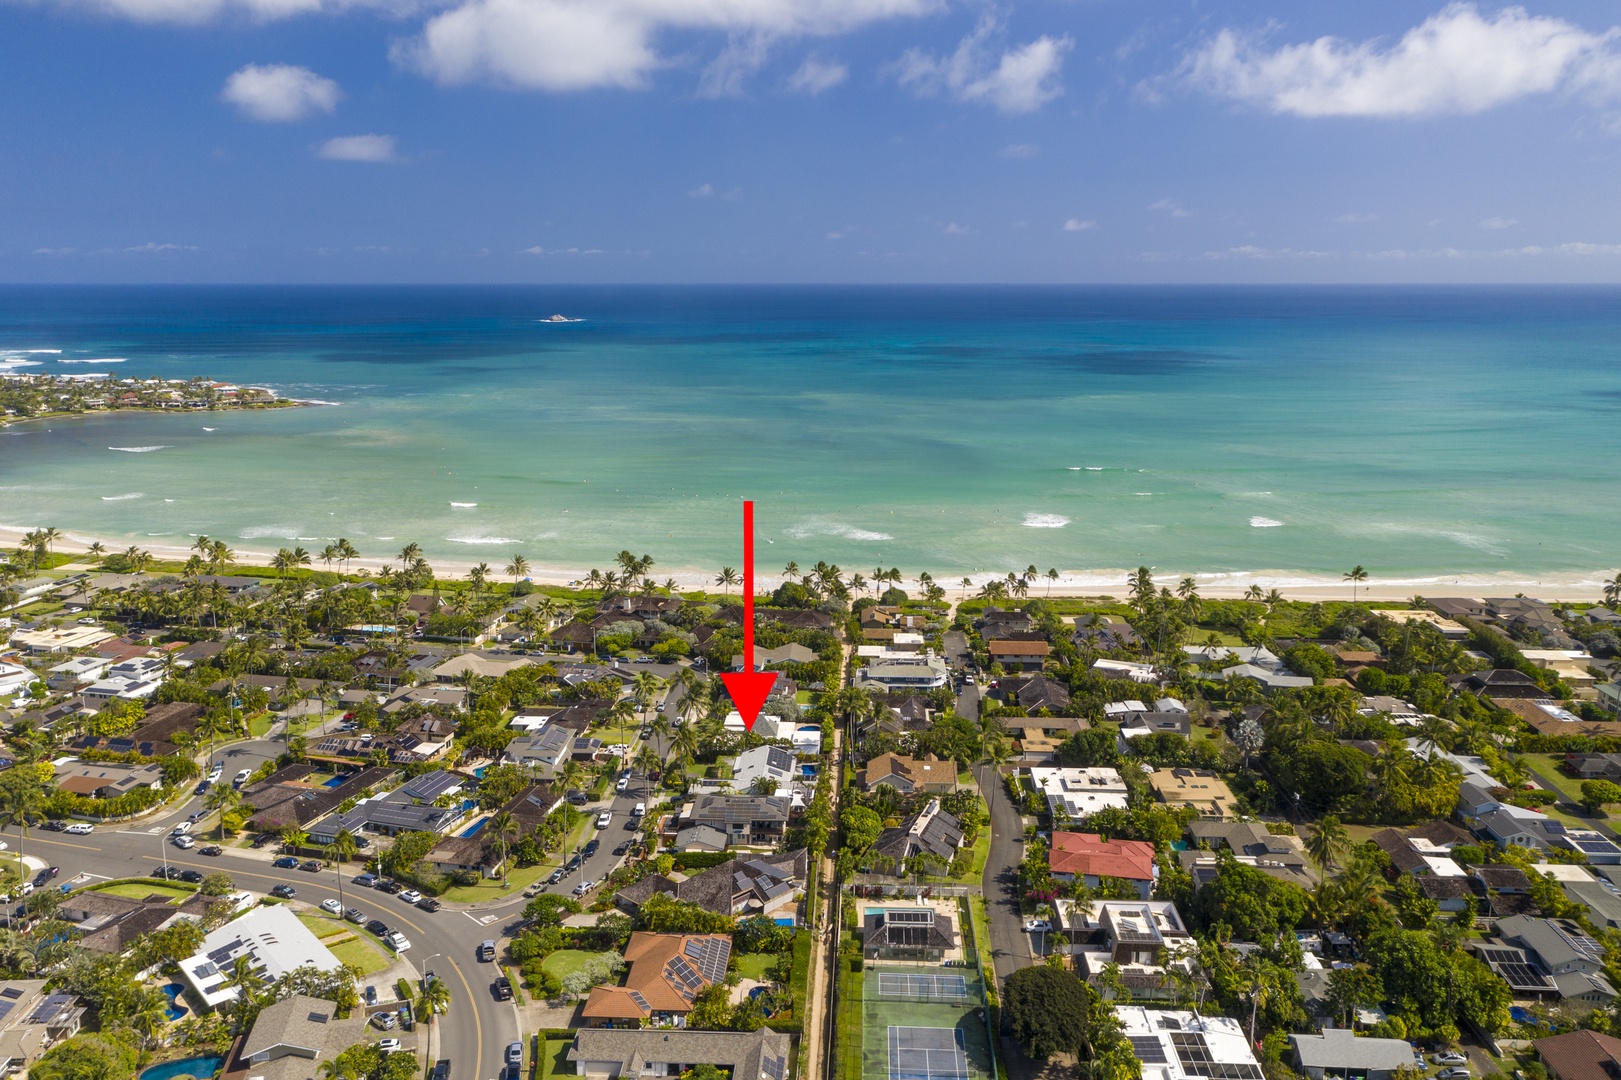 Kailua Vacation Rentals, Lokomaika'i Kailua - Private access to beach lane